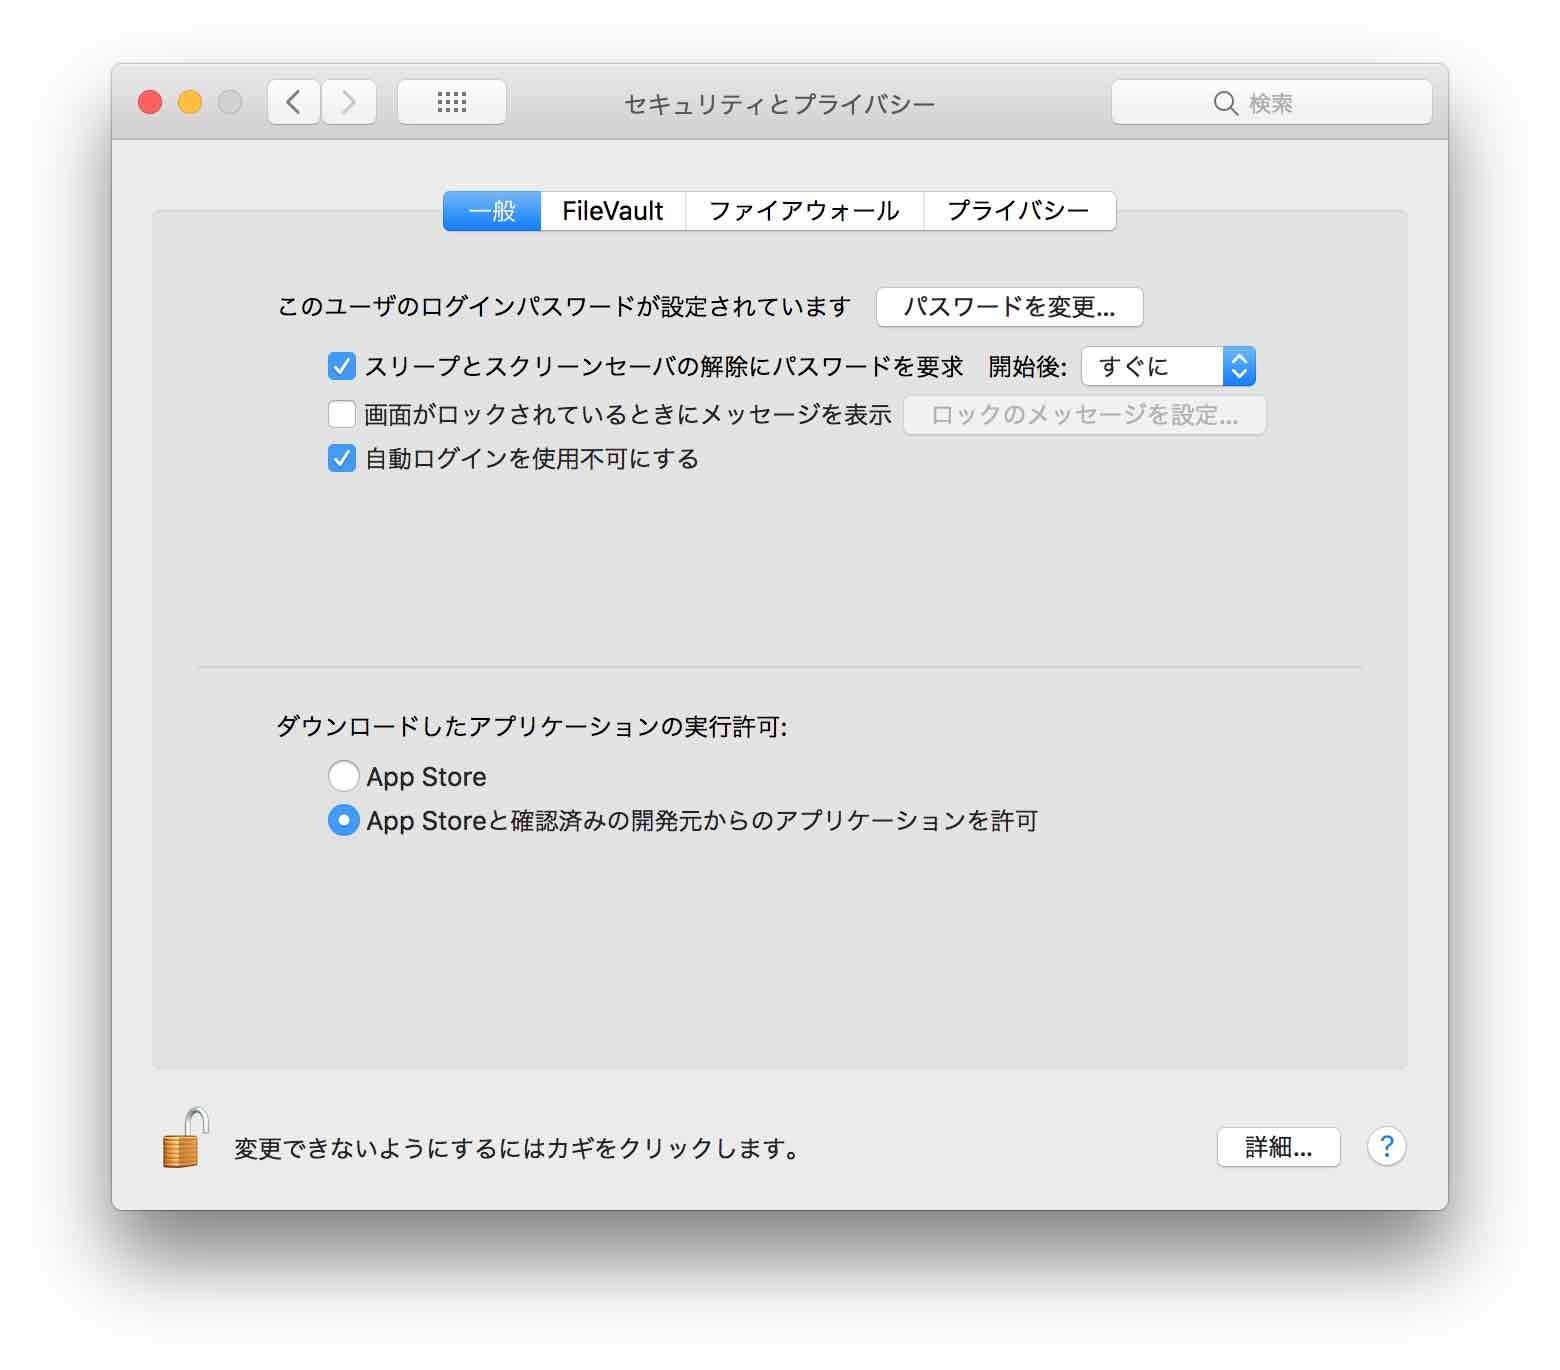 macOS High Sierra システム環境設定のセキュリティとプライバシー 一般のスクリーンショット Allow(許可)がない